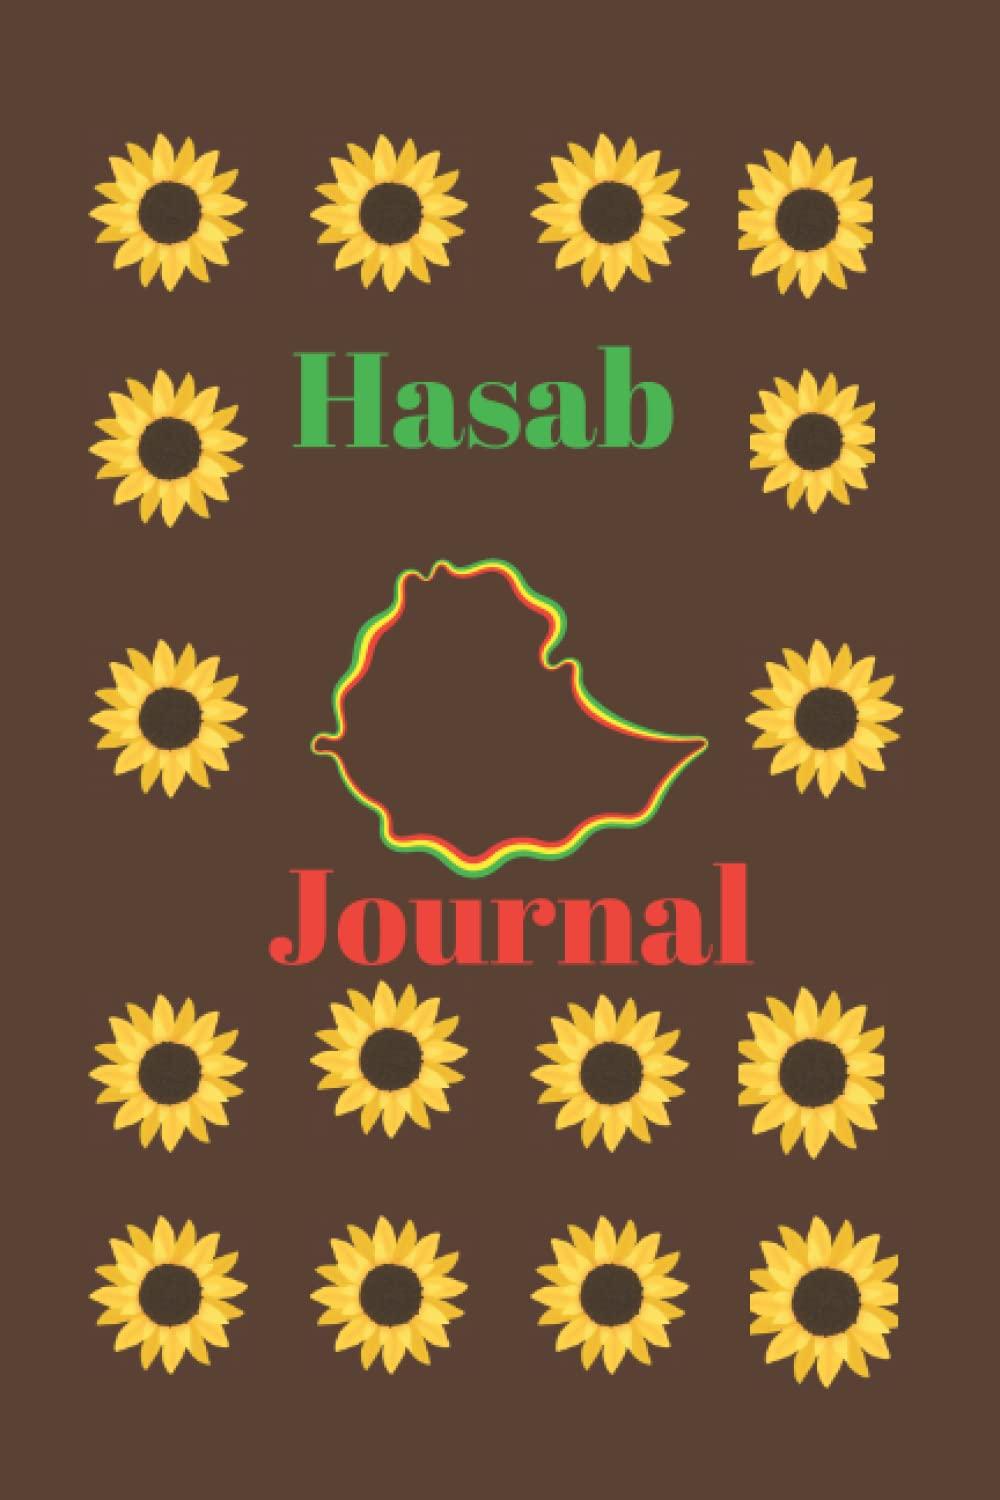 Hasab Journal